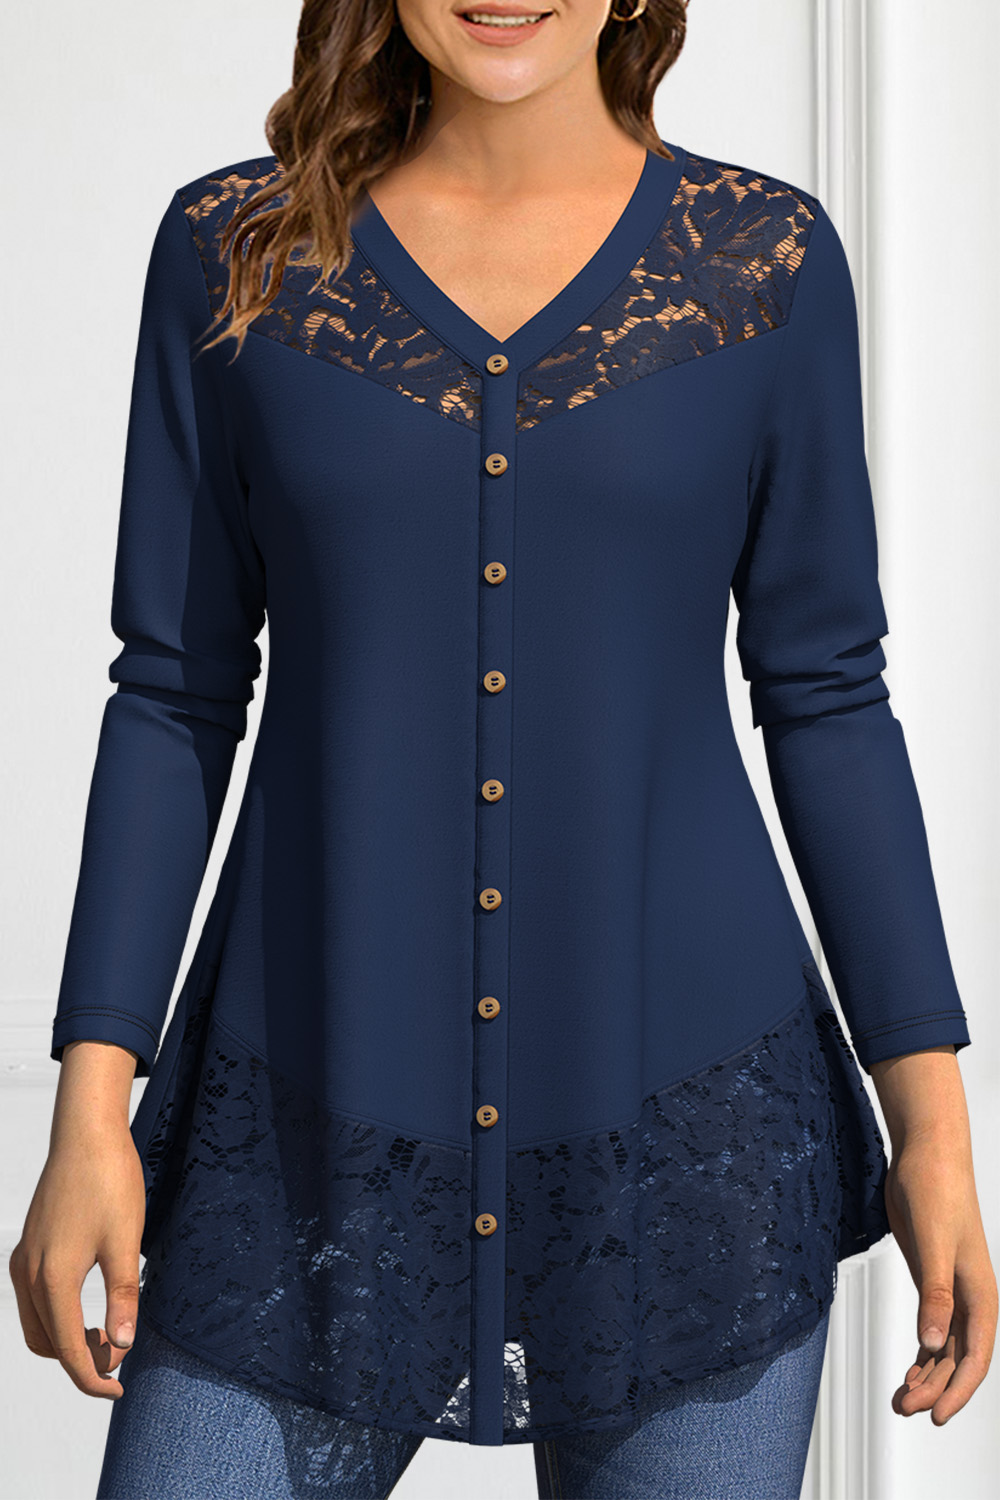 Flycurvy Plus Size Casual Blue Lace Stitching Decorative Button Blouse